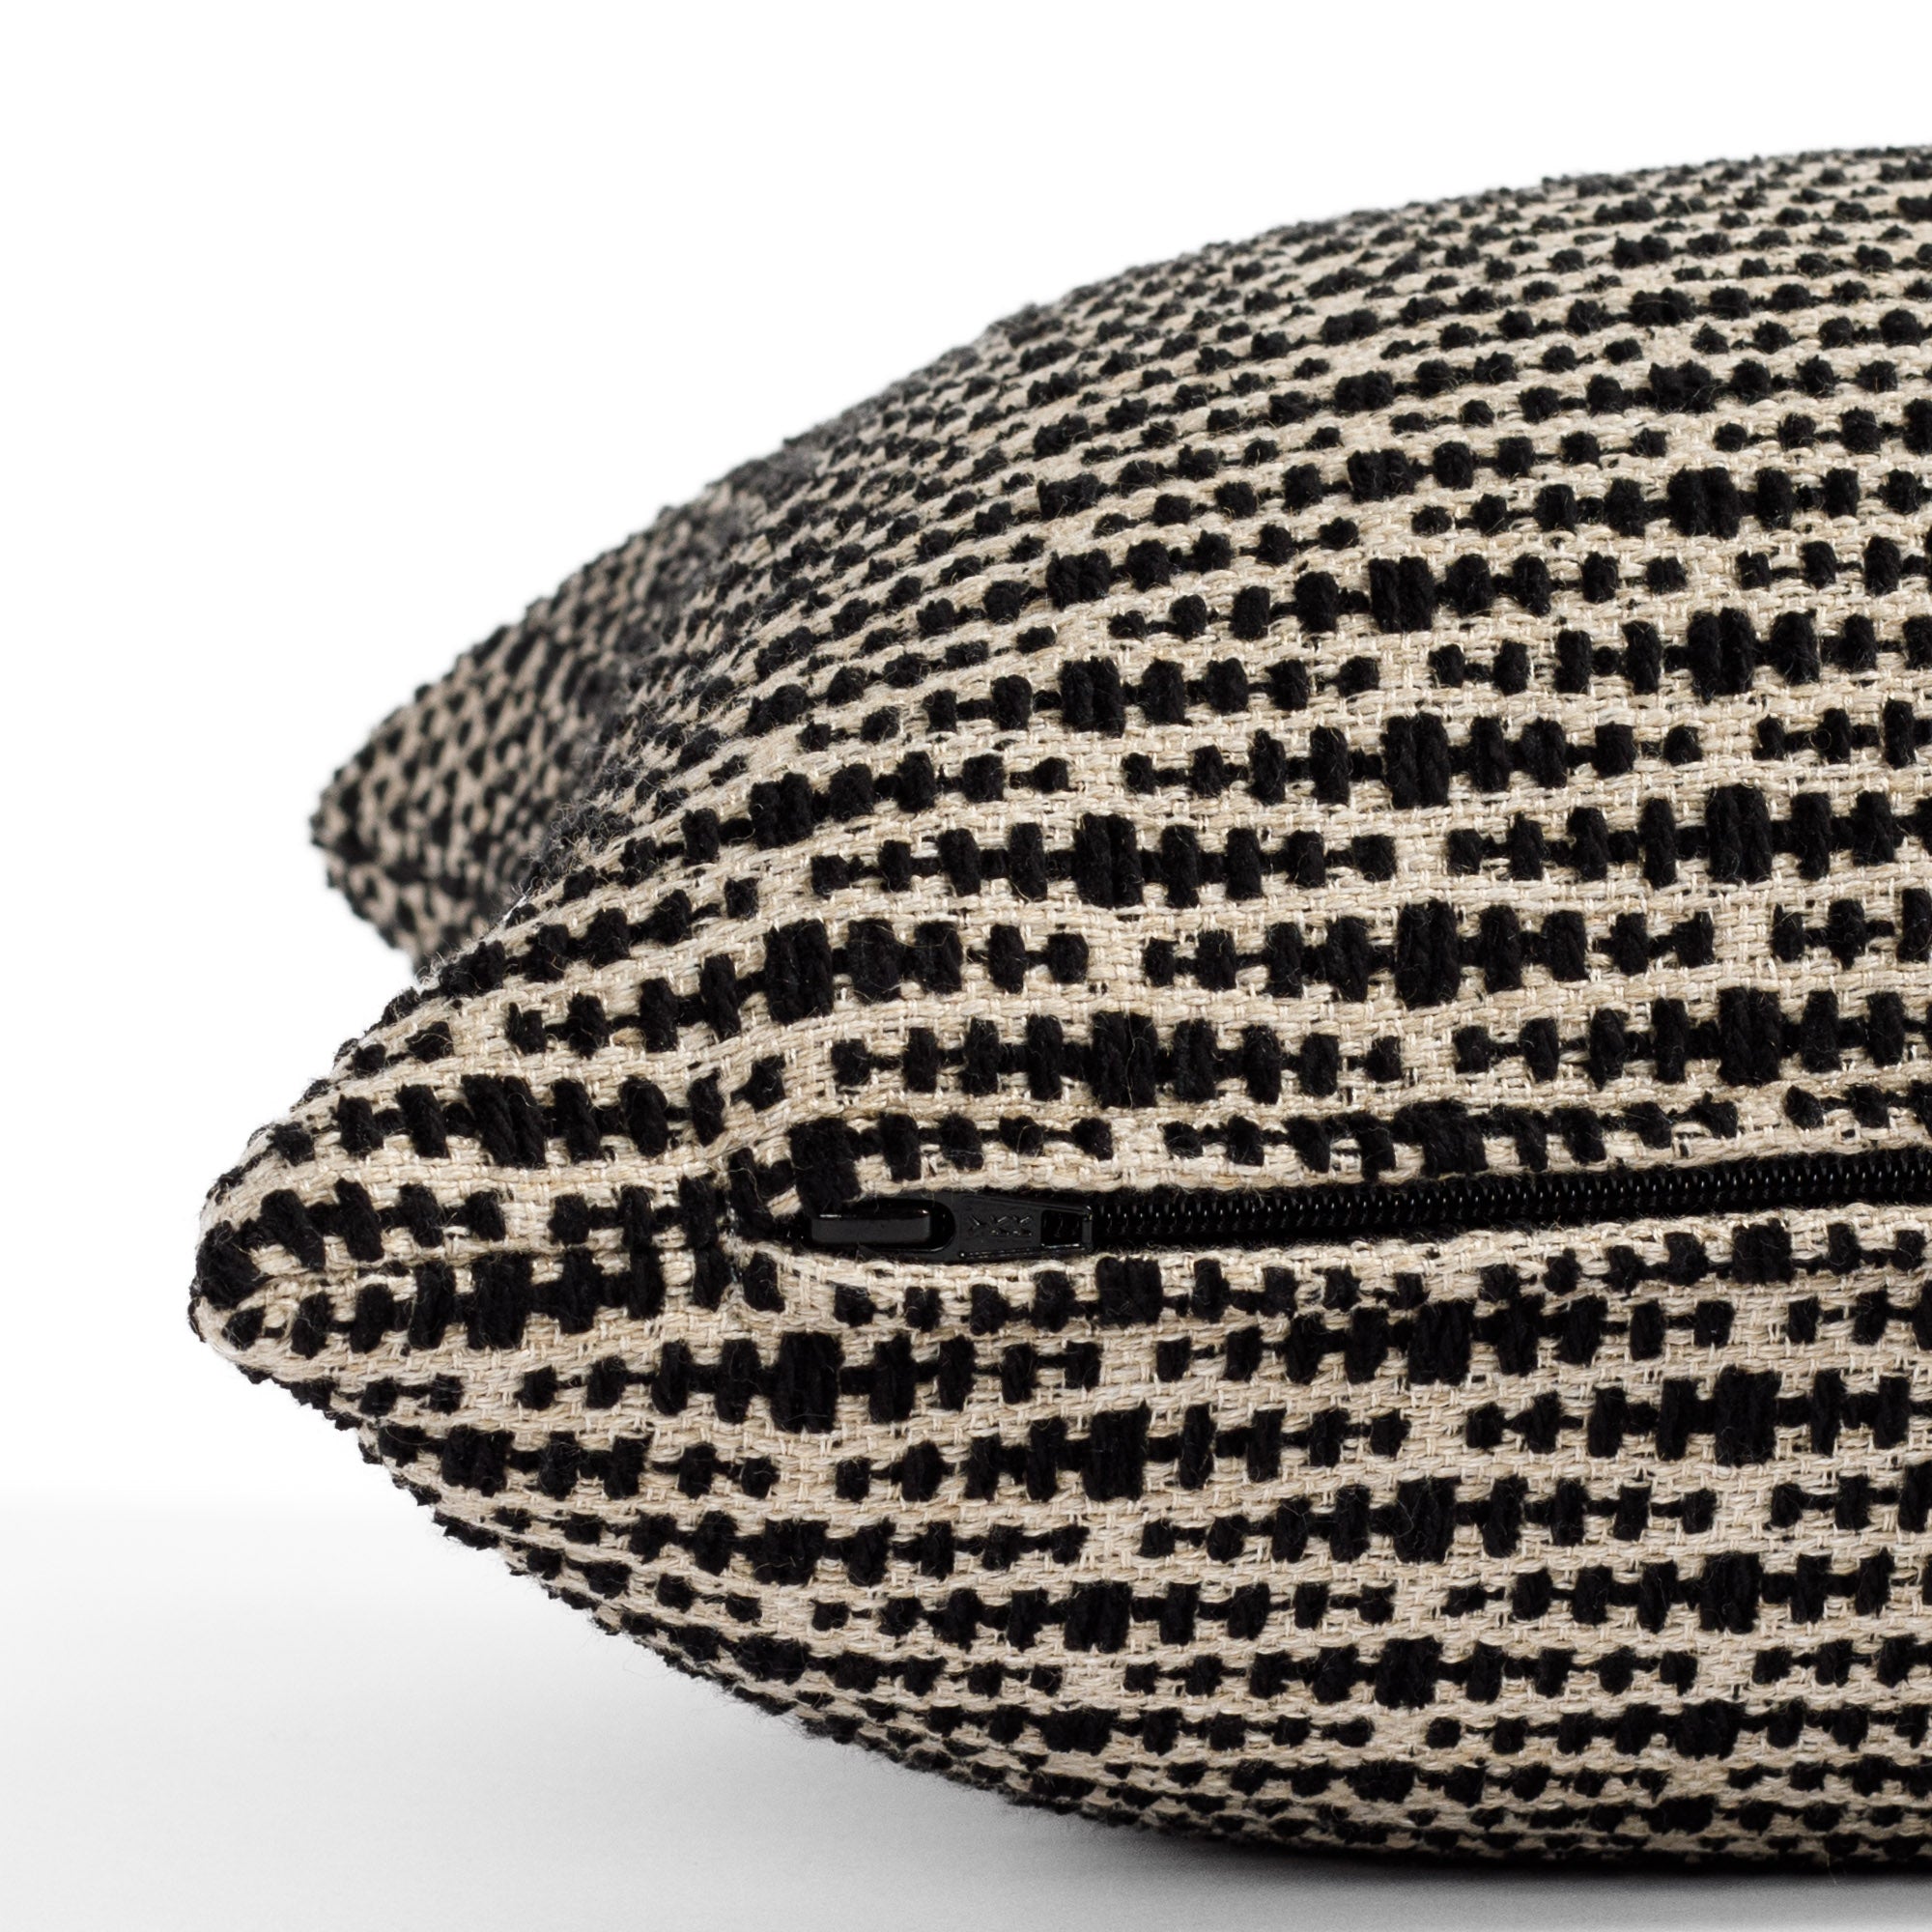 a black and tan geometric patterned lumbar pillow : close up zipper view